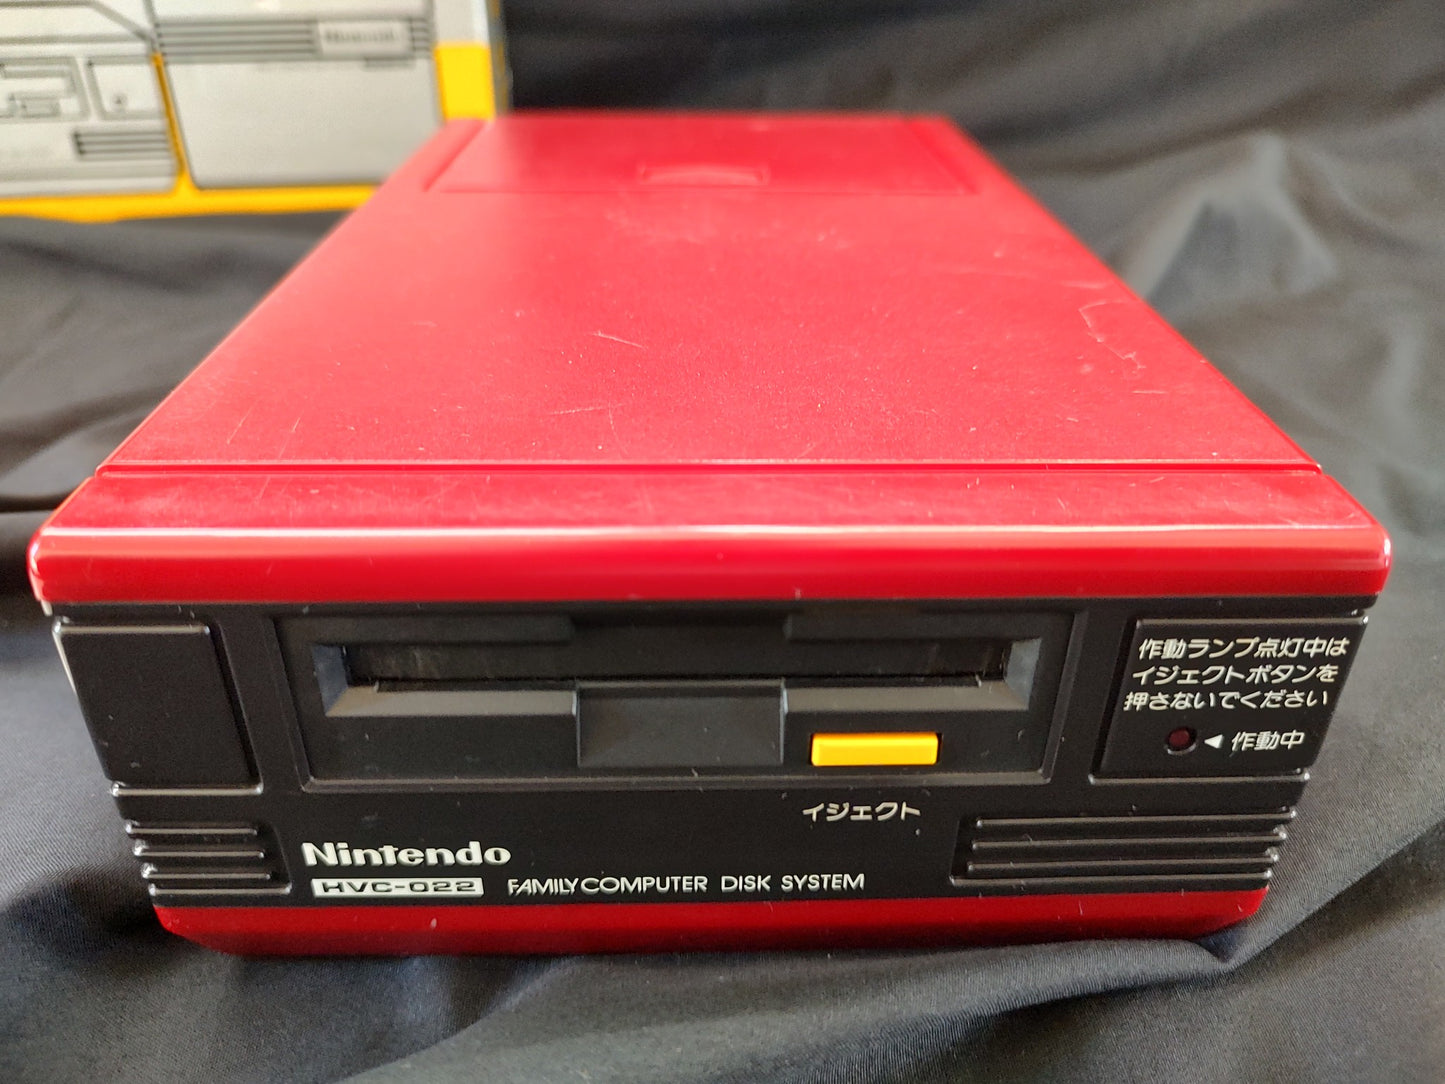 Nintendo Famicom Disk System(HVC-022) Console,RAM Adapter set, Working-f0711-